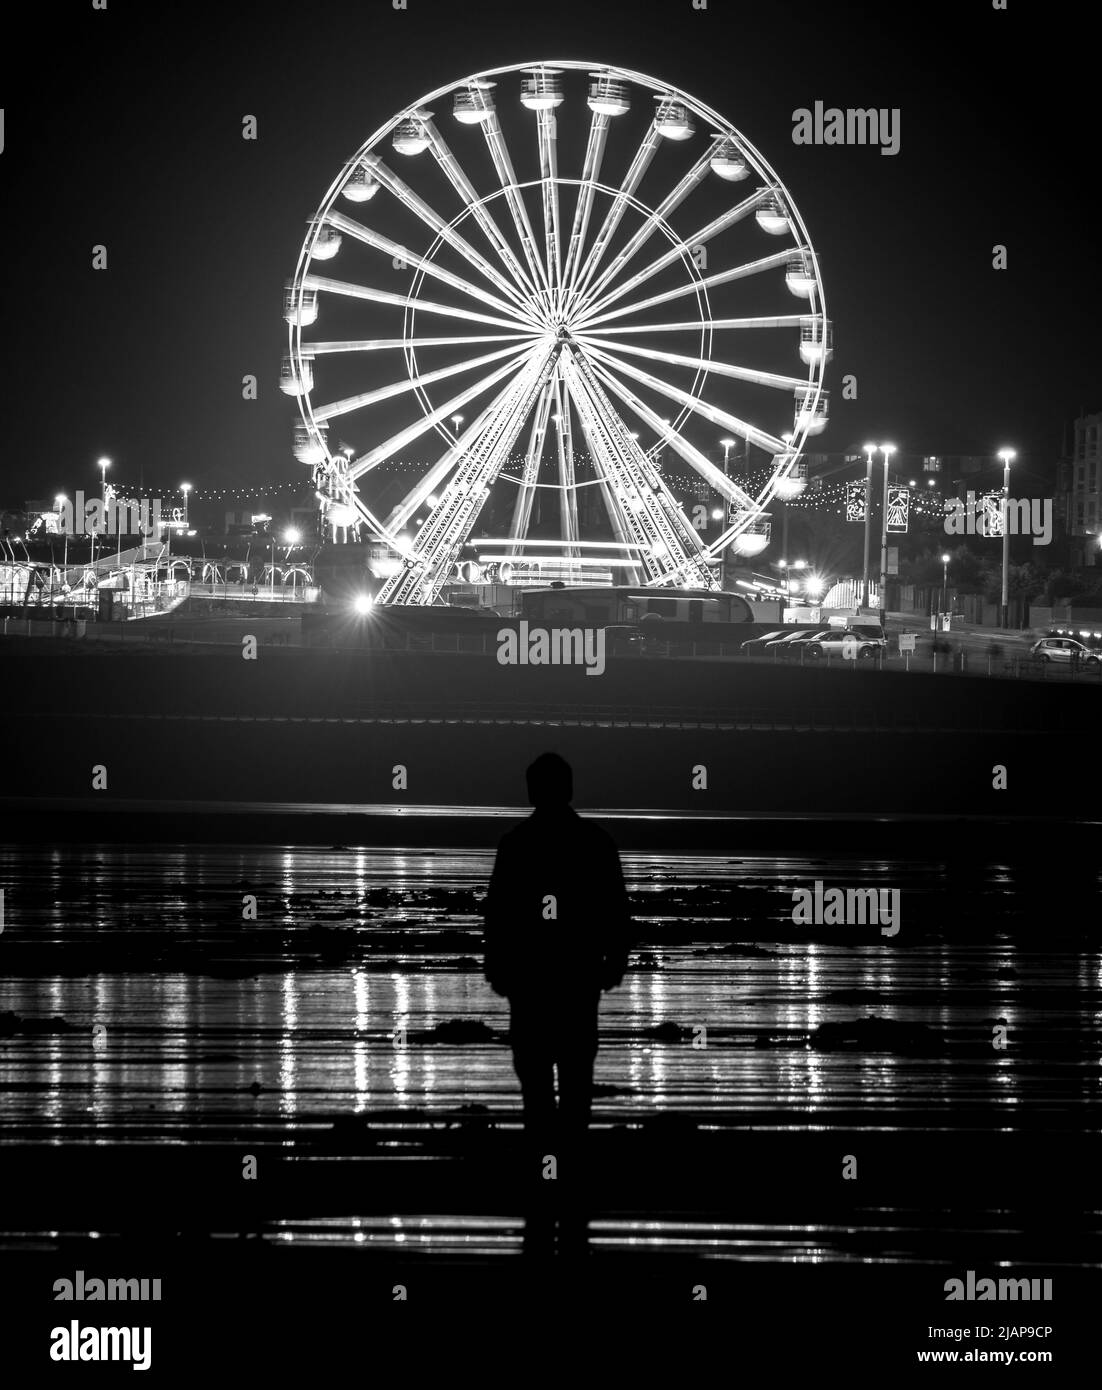 A nocturnal view across the sand of Seaburn beach towards an illuminated Ferris wheel Stock Photo